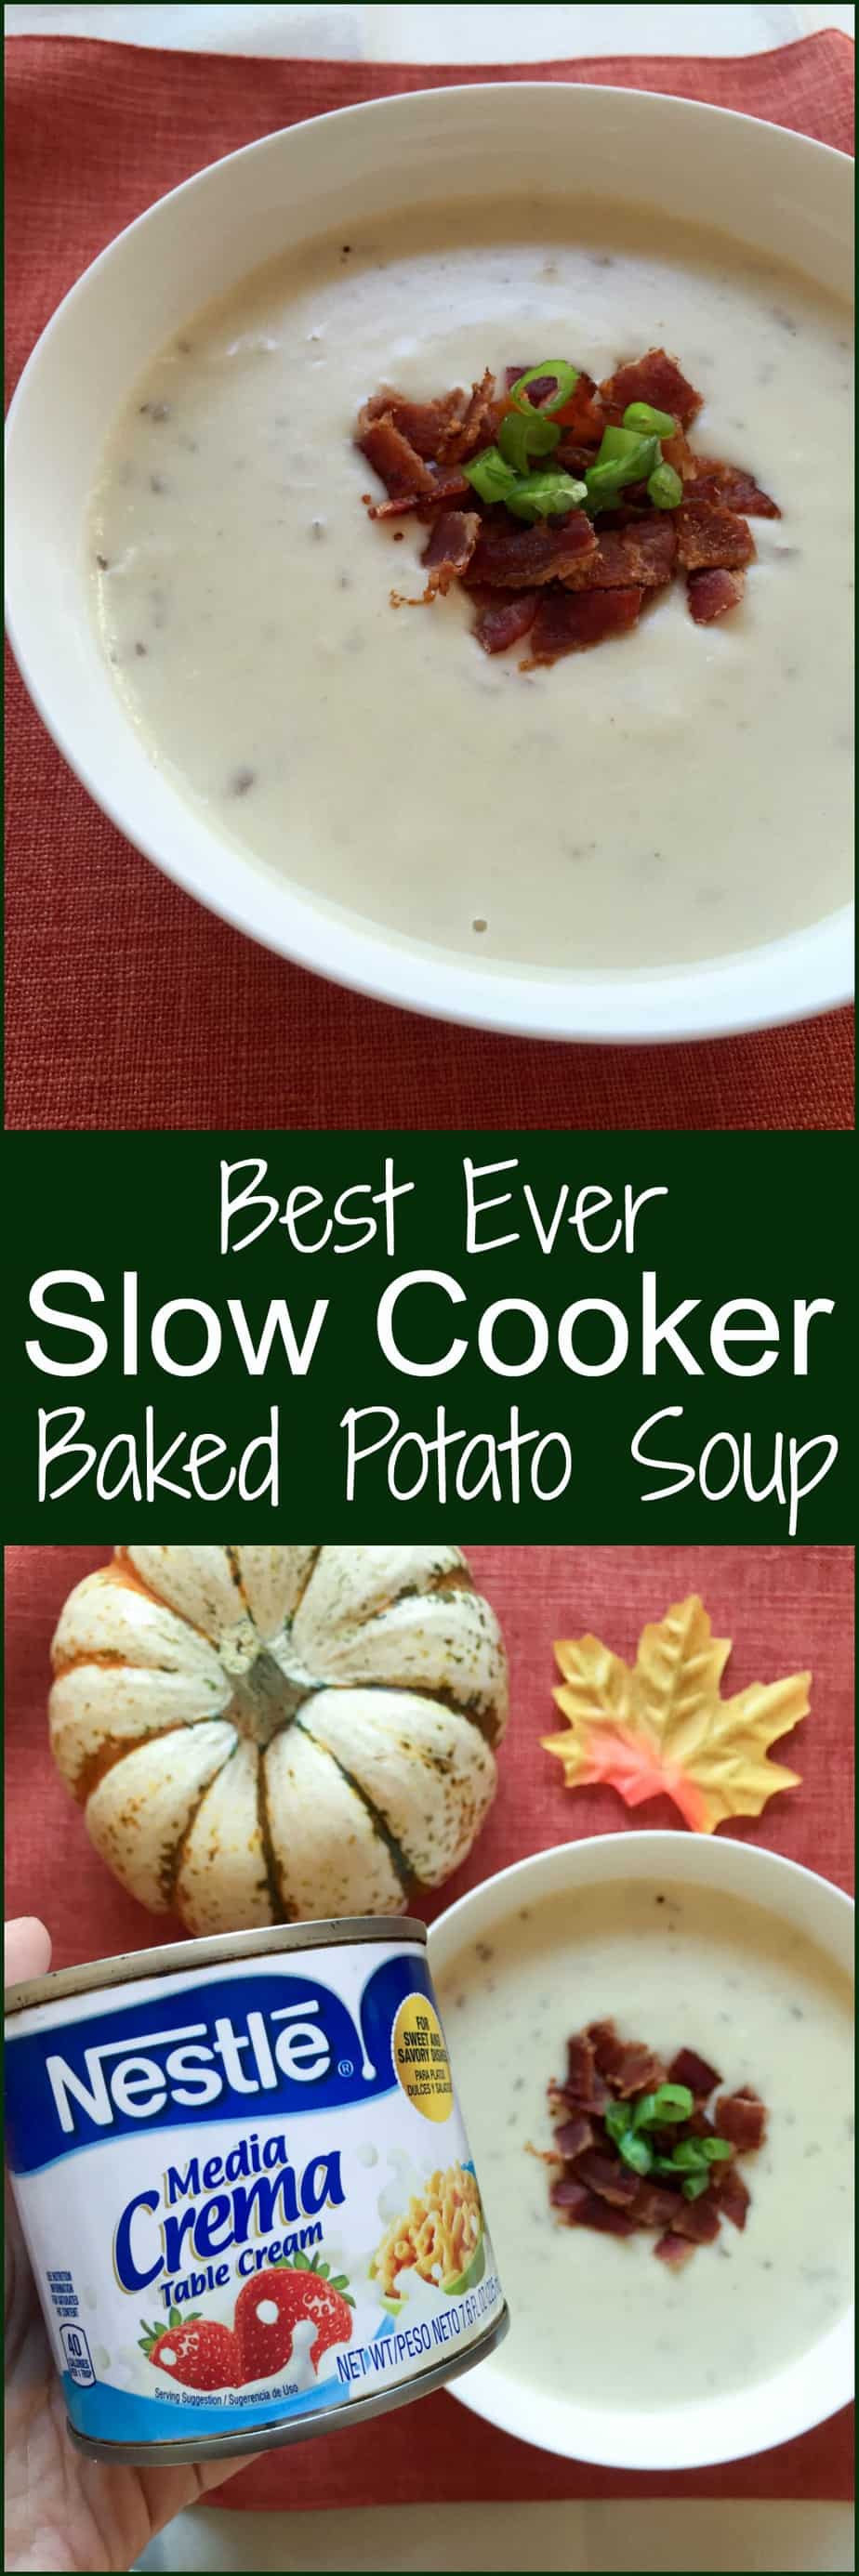 nestle slow cooker baked potato soup